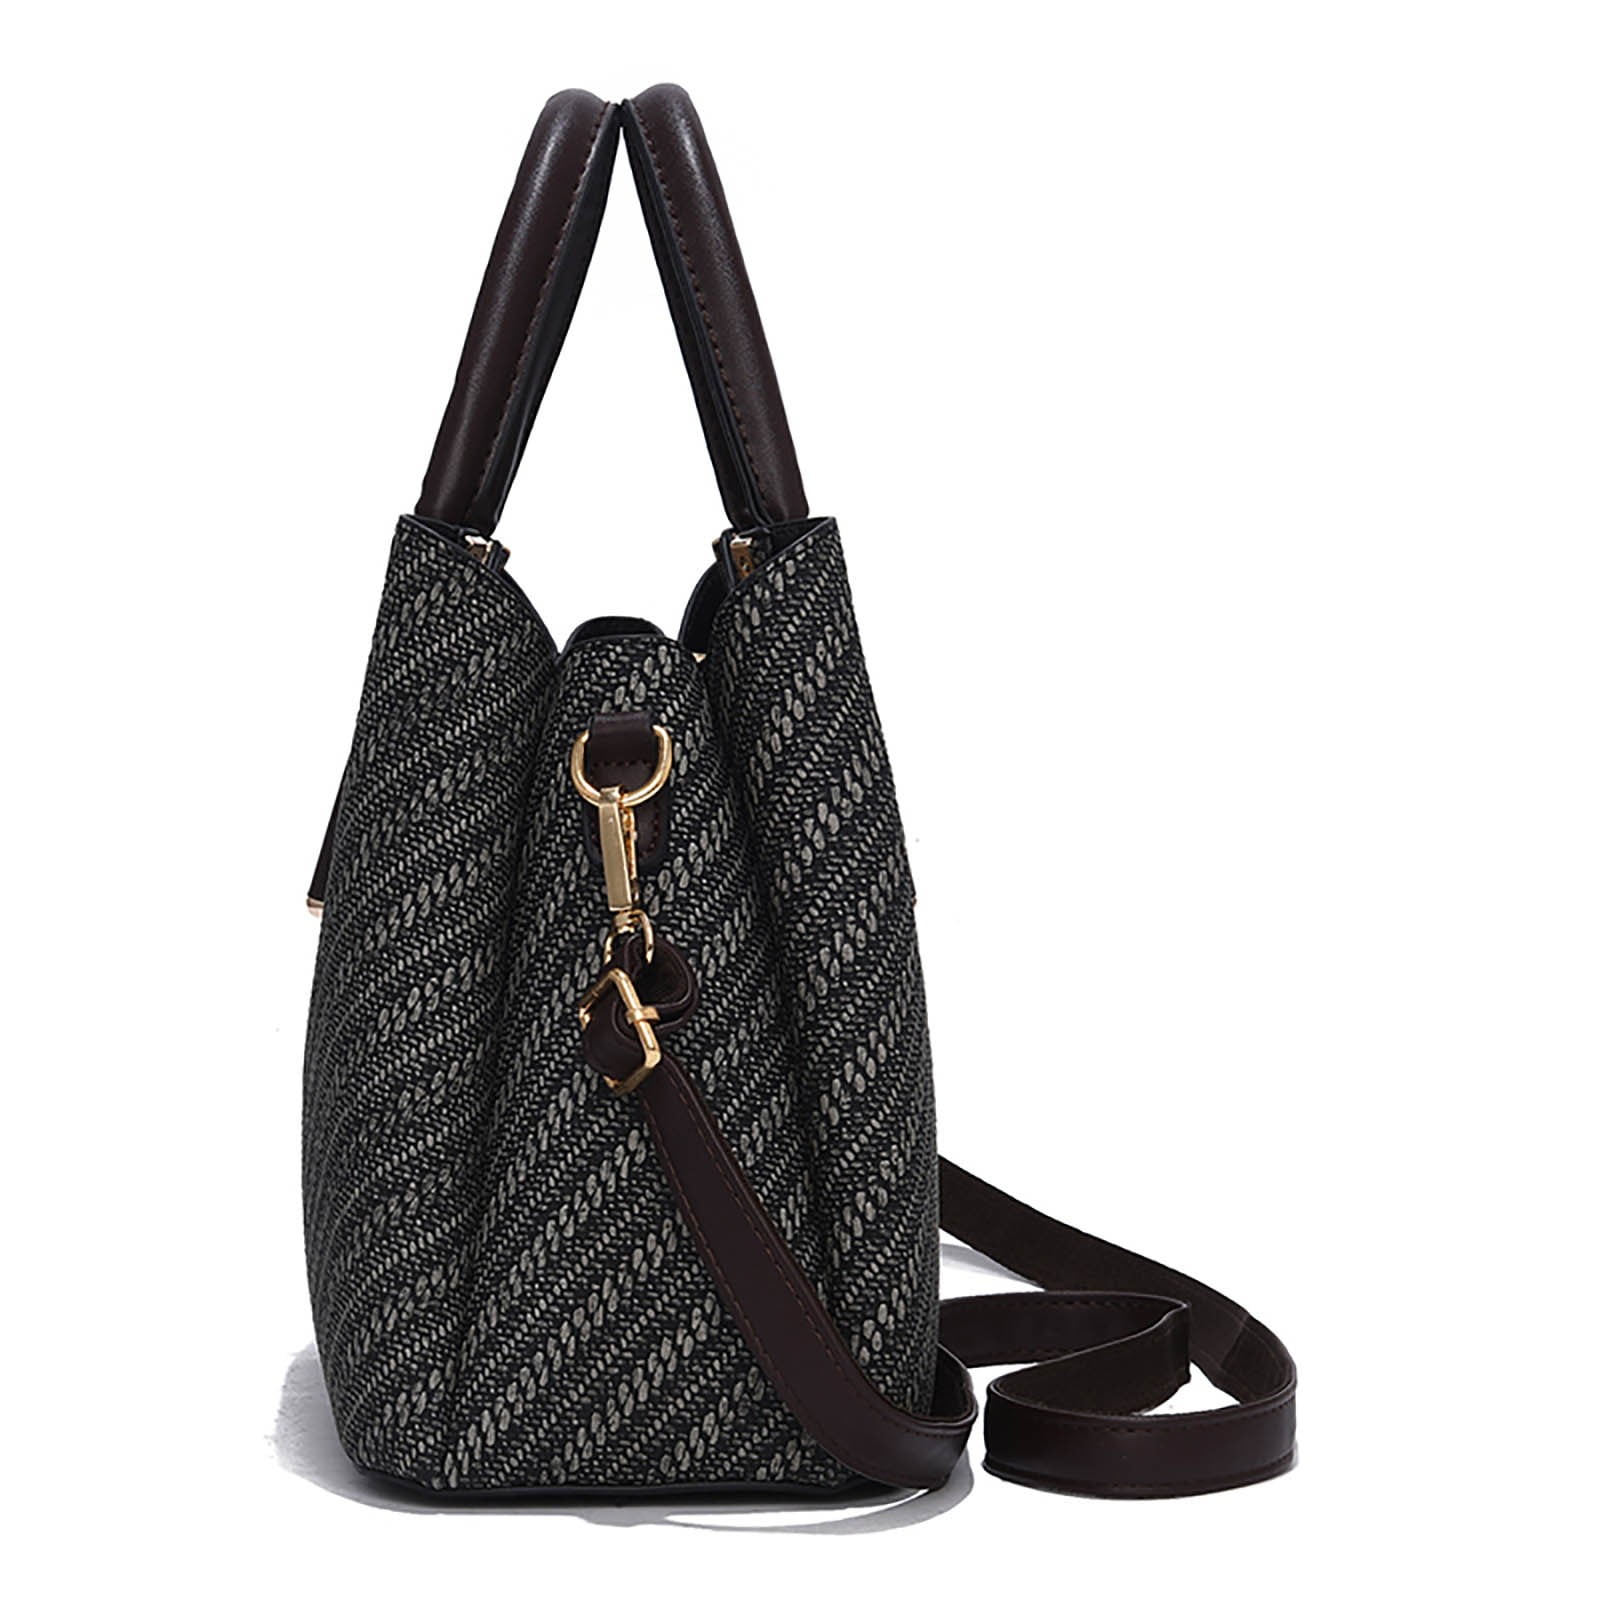 Woxinda Tote Bag for Women Fashion Womens Handbags Ladies Purse Satchel Shoulder Bags Tote Leather Bag Sublimation Tote Bags Handbag Organizers for